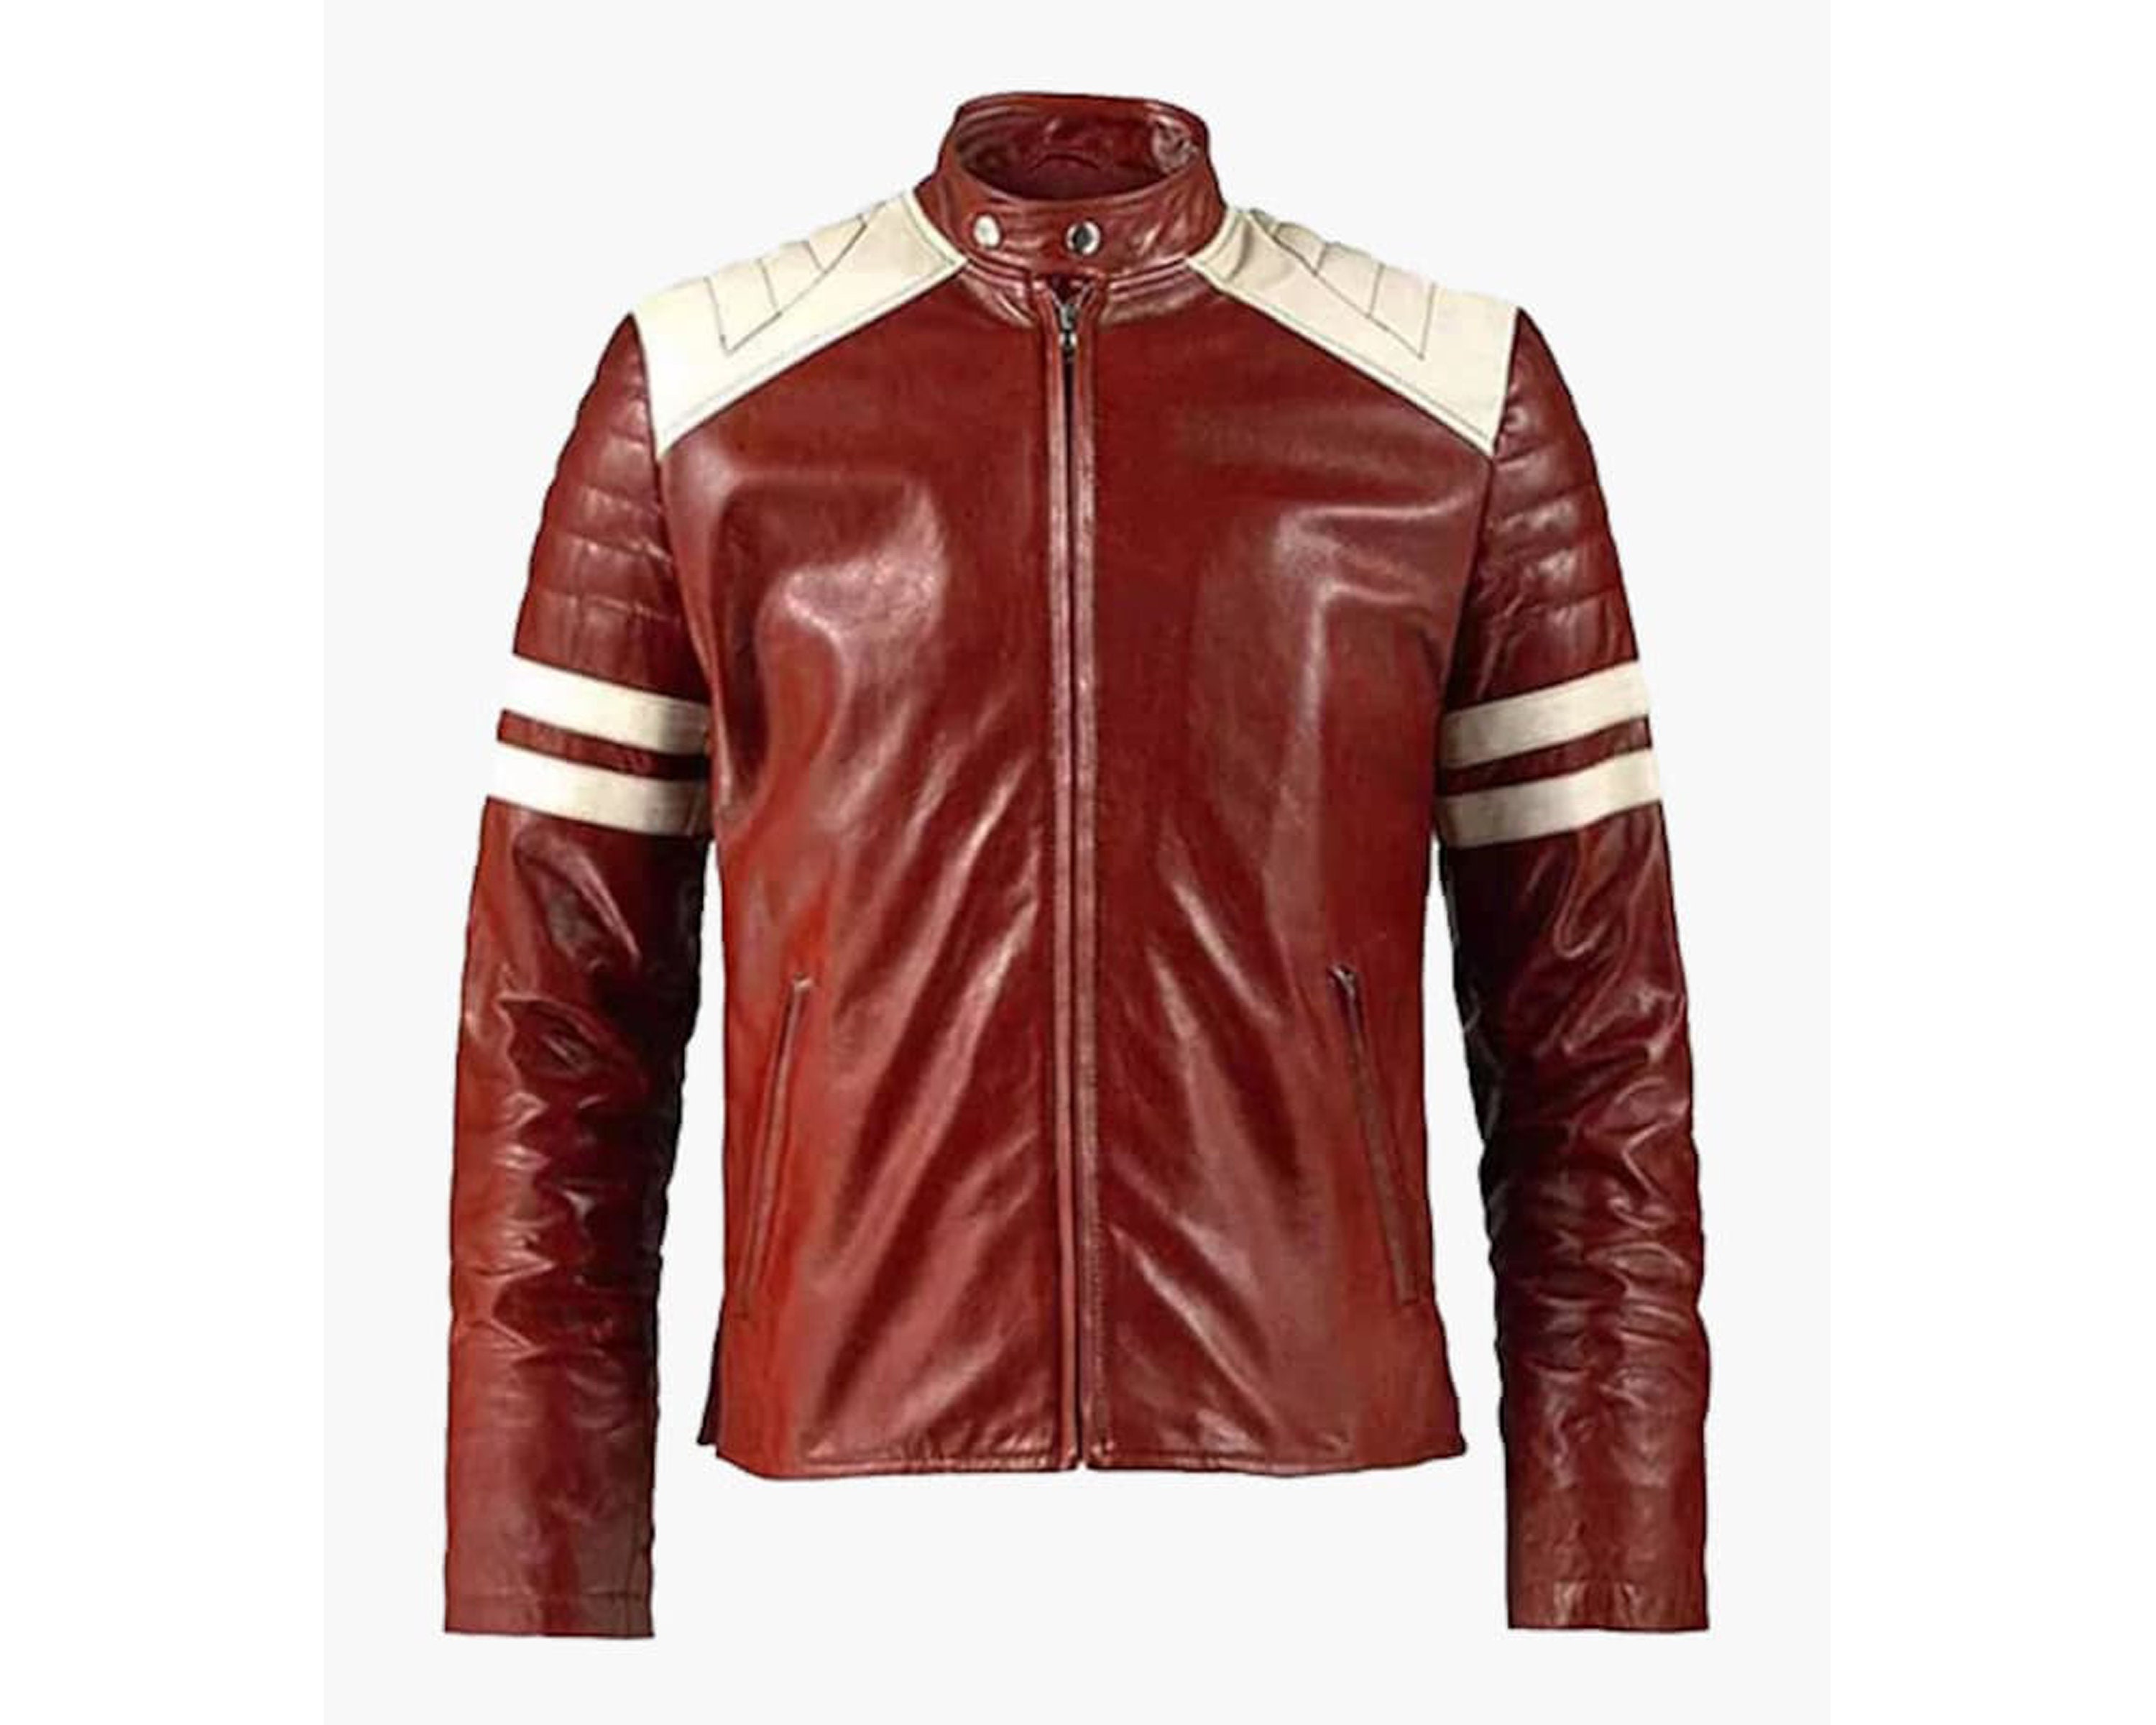 Brad Pitts Tyler Durden Fight Club Mayhem Red & White Leather Jacket